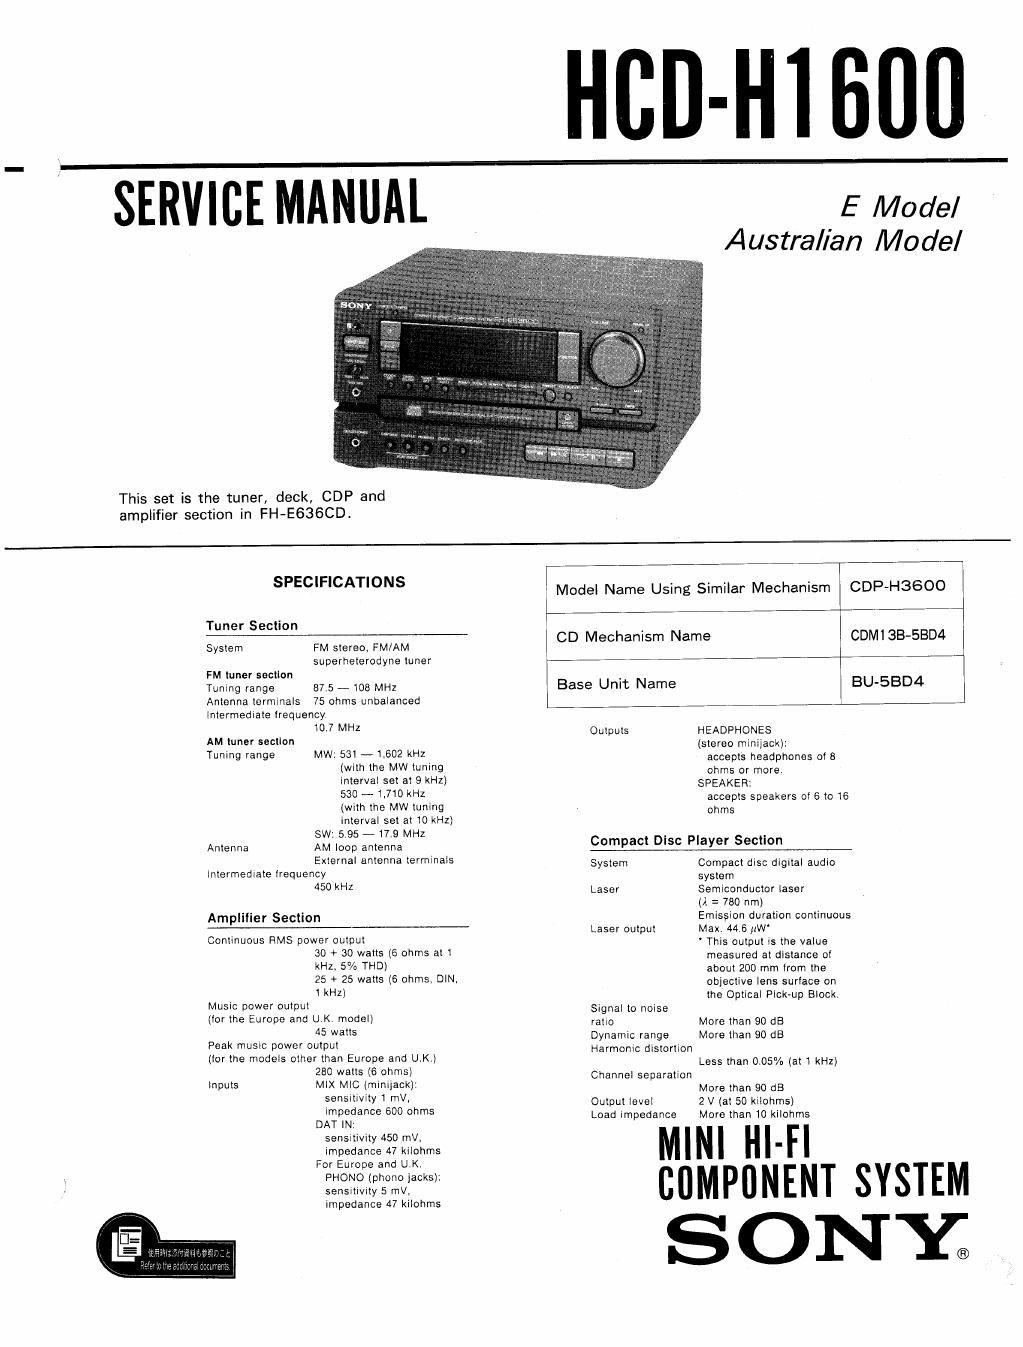 sony hcd h 1600 service manual